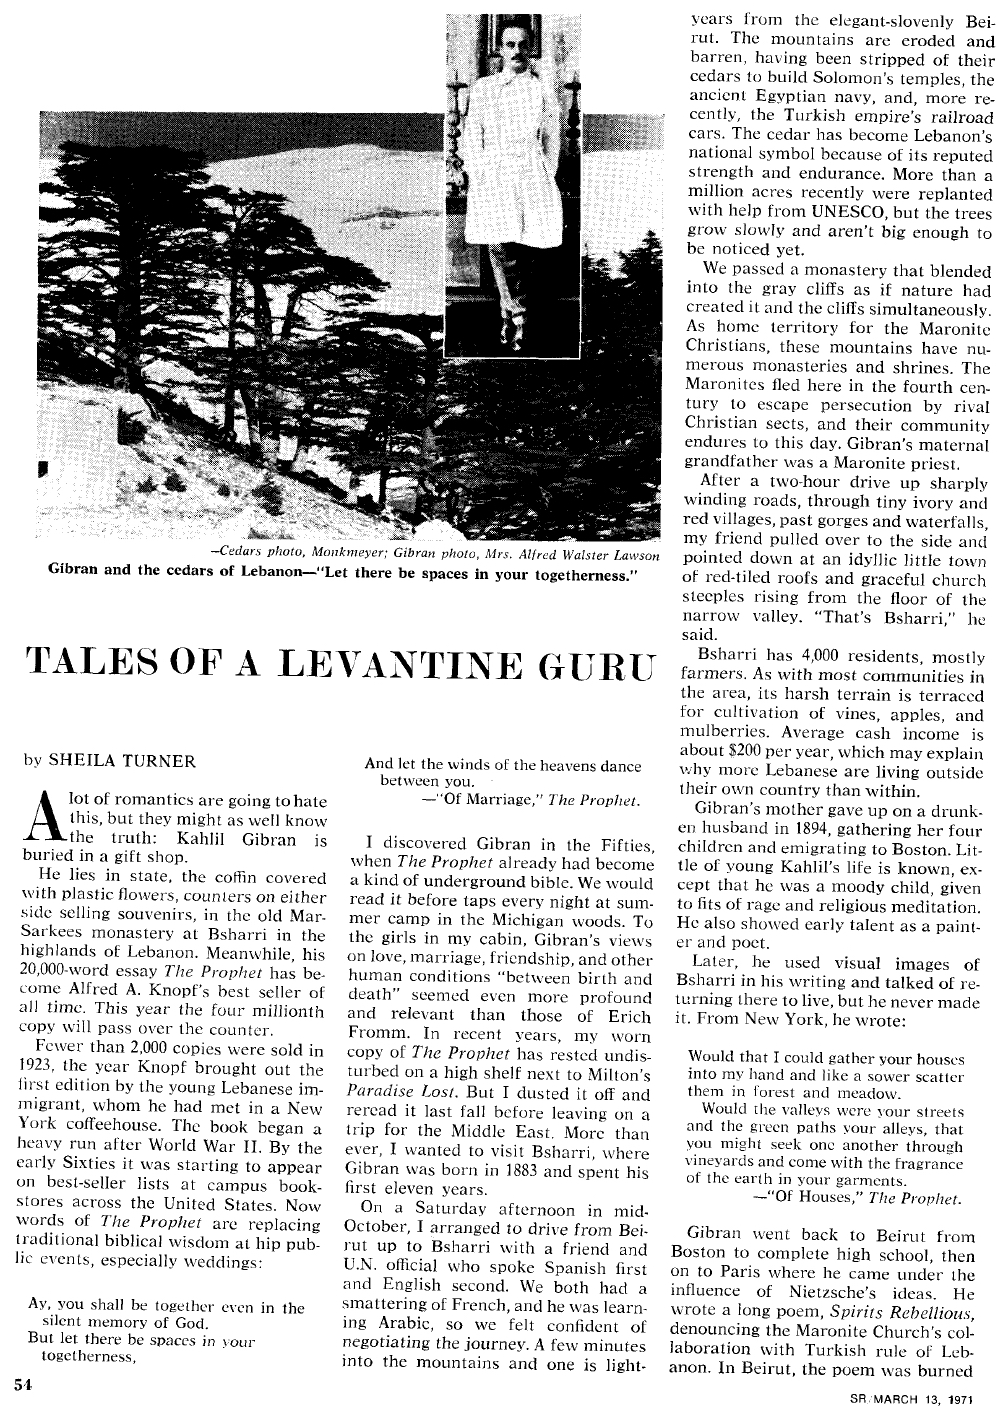 Sheila Turner, “Tales of a Levantine Guru”, Saturday Review, March 13, 1971, pp. 54–55.